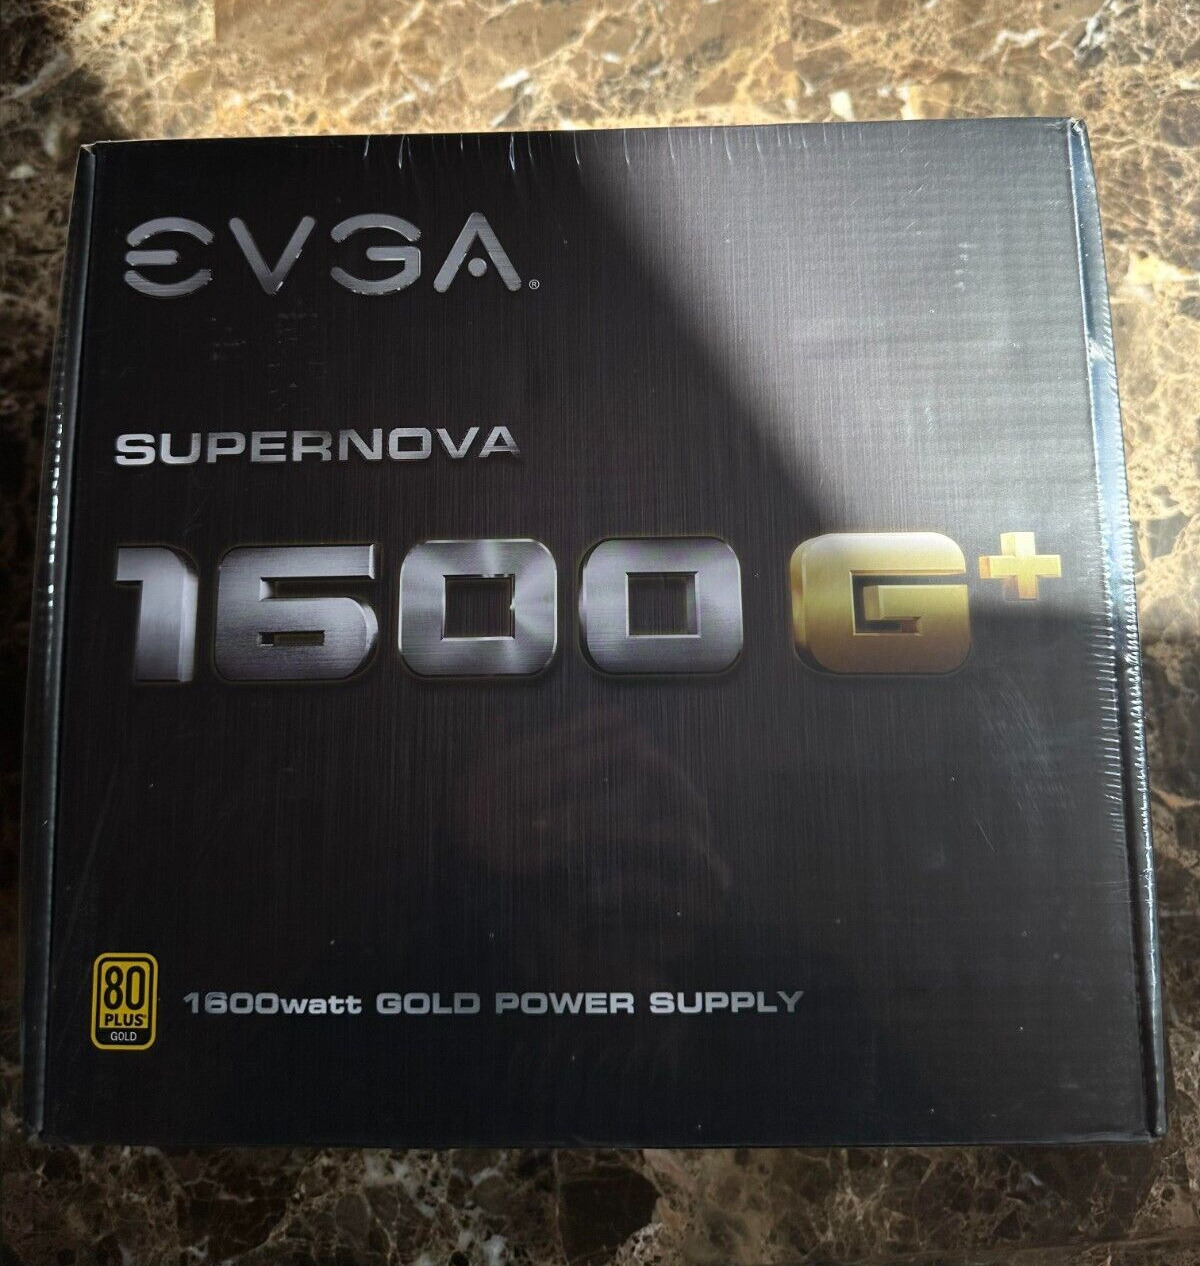 Sealed EVGA Supernova 1600 G+ Gold Power Supply